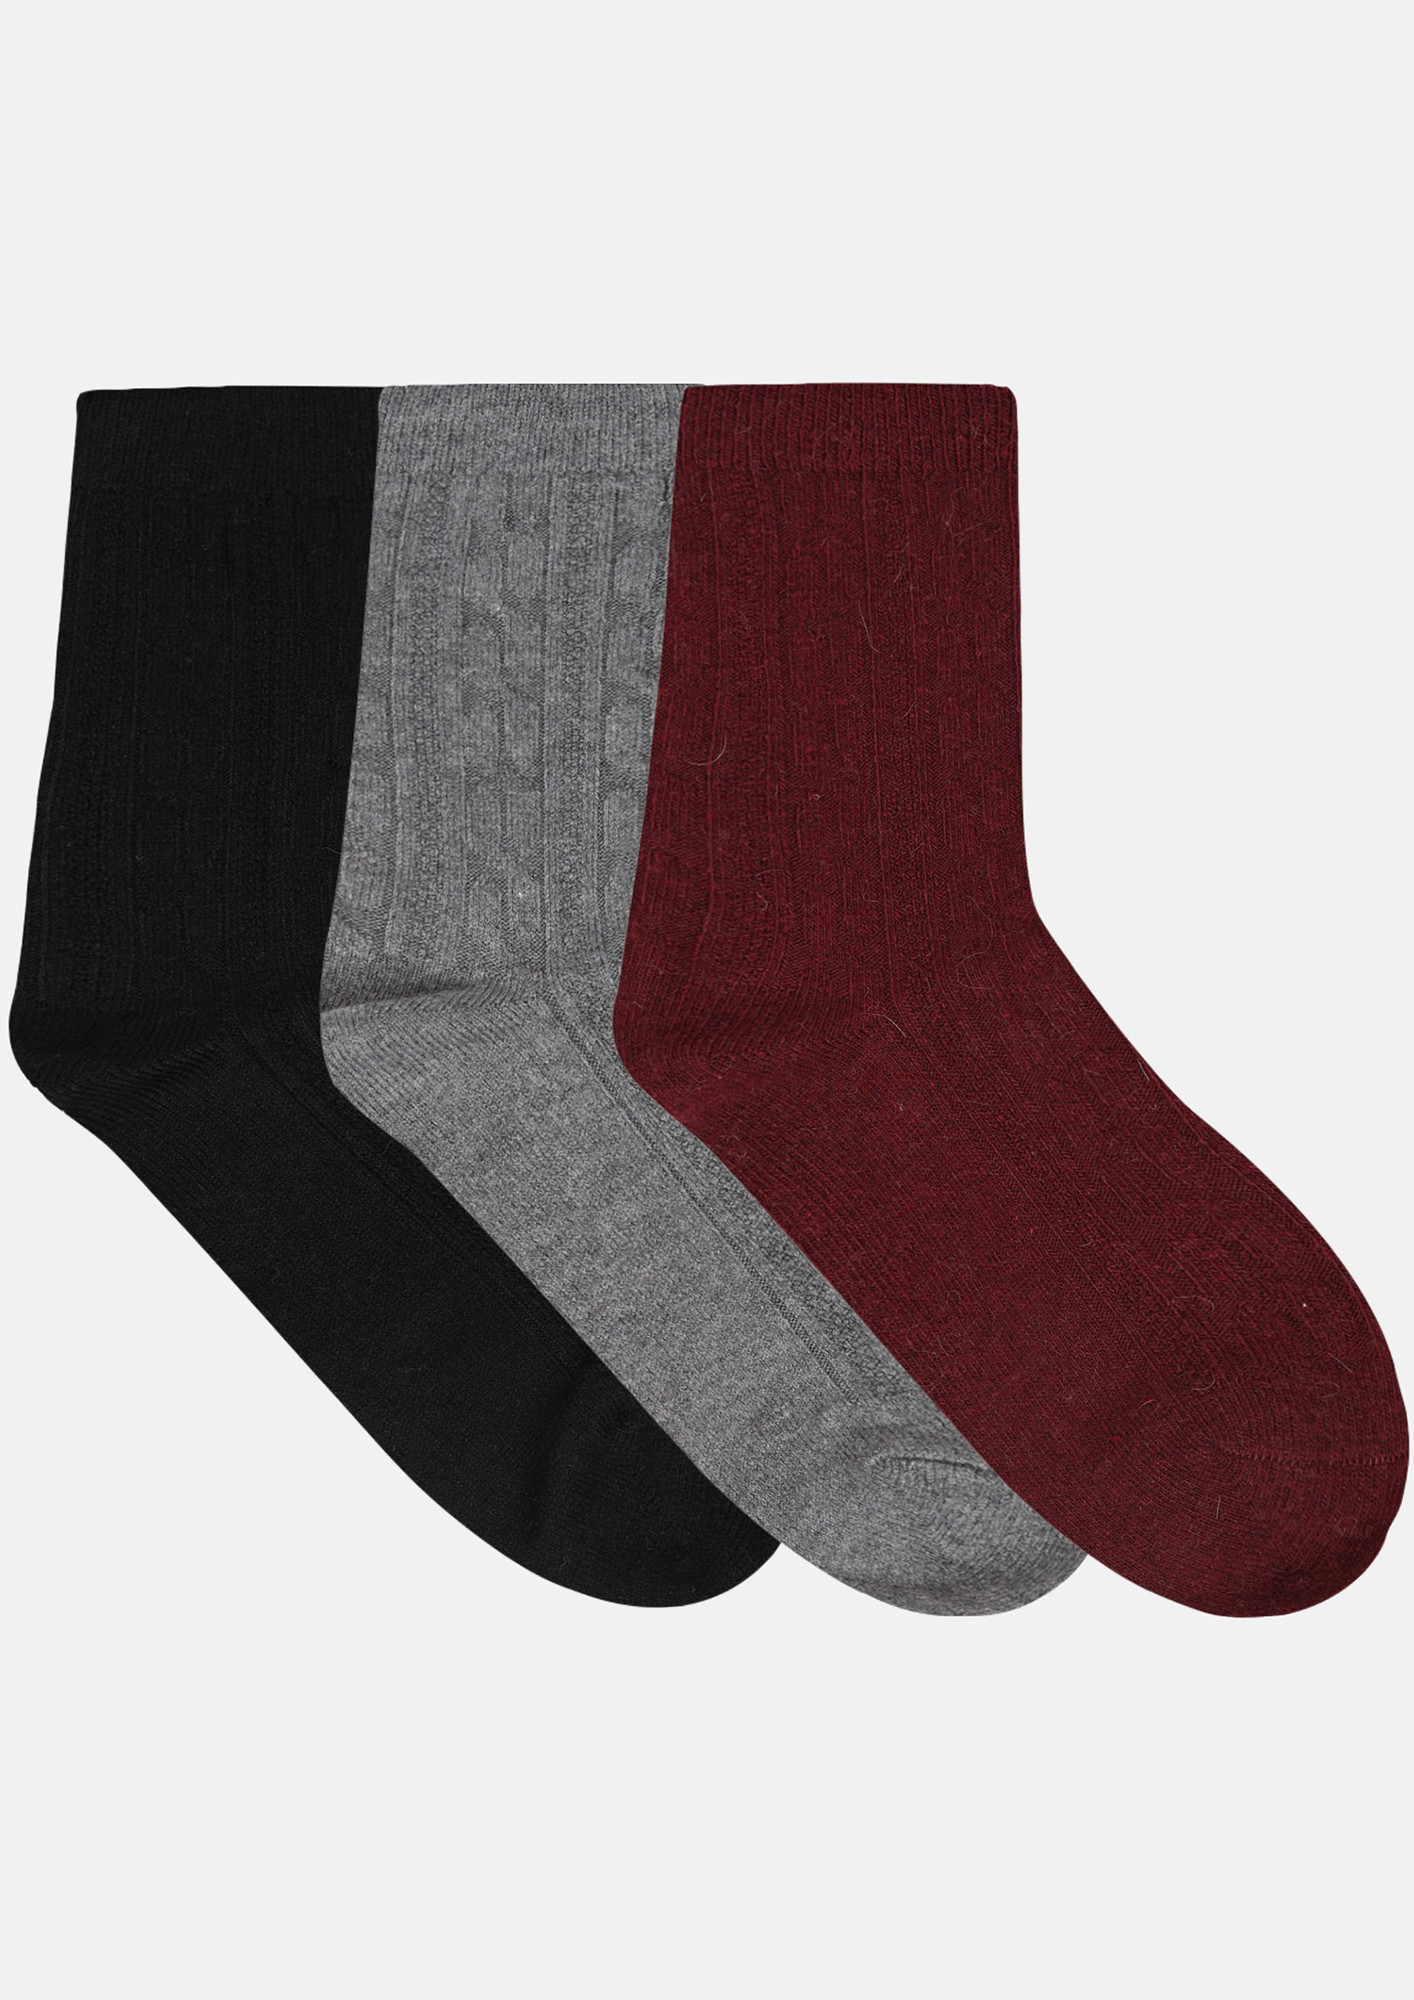 NEXT2SKIN Women's Woollen Regular length Socks (Pack of 3) (Black,Light Grey,Maroon)